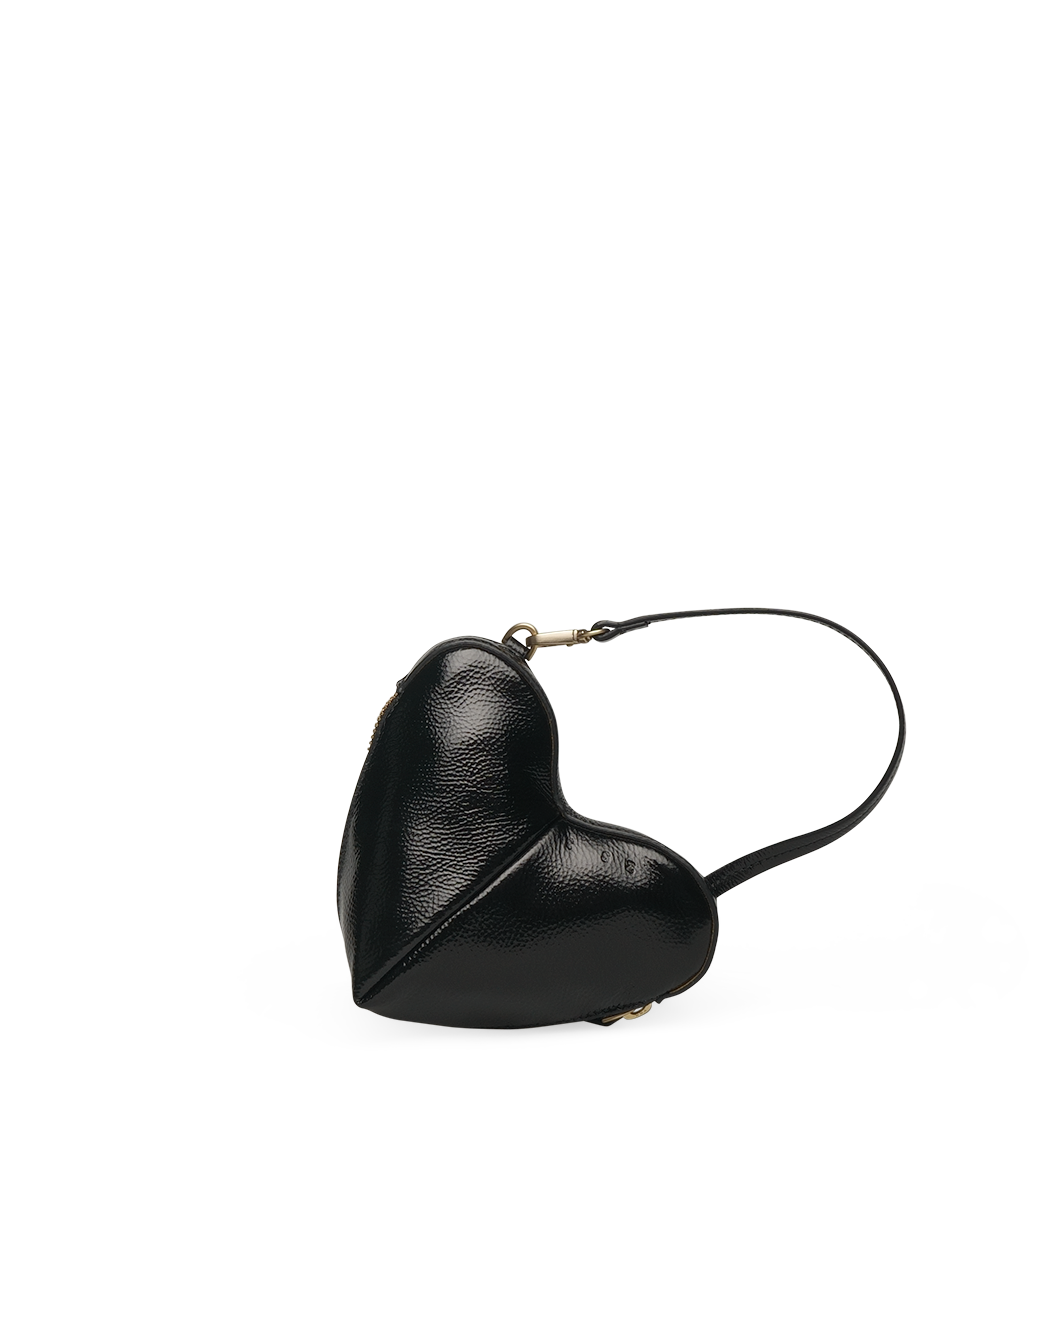 the corazón glossy black pouch